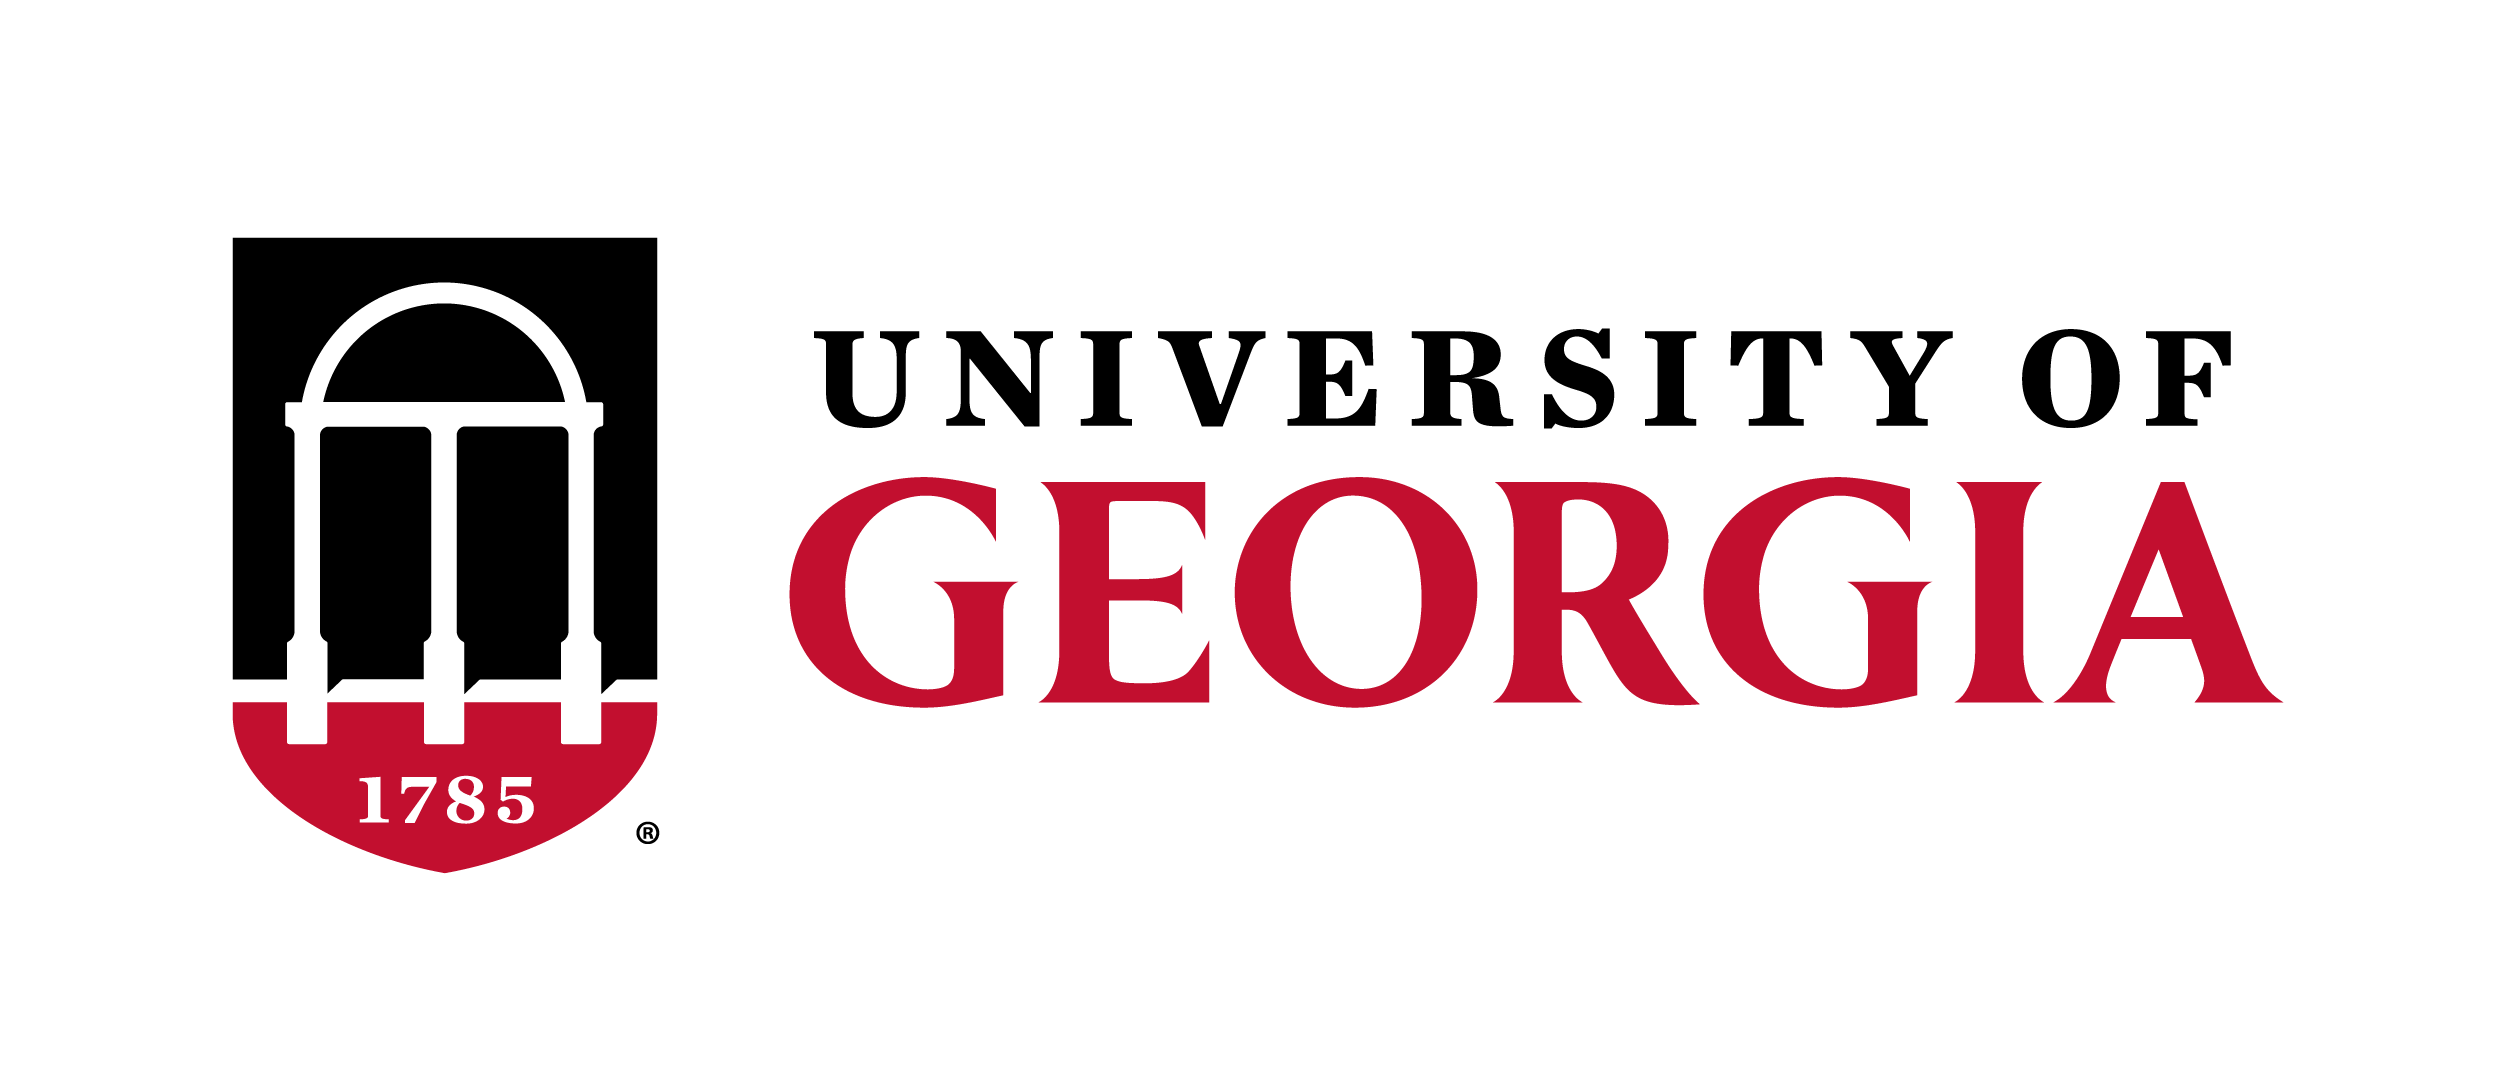 University of Georgia formal logo